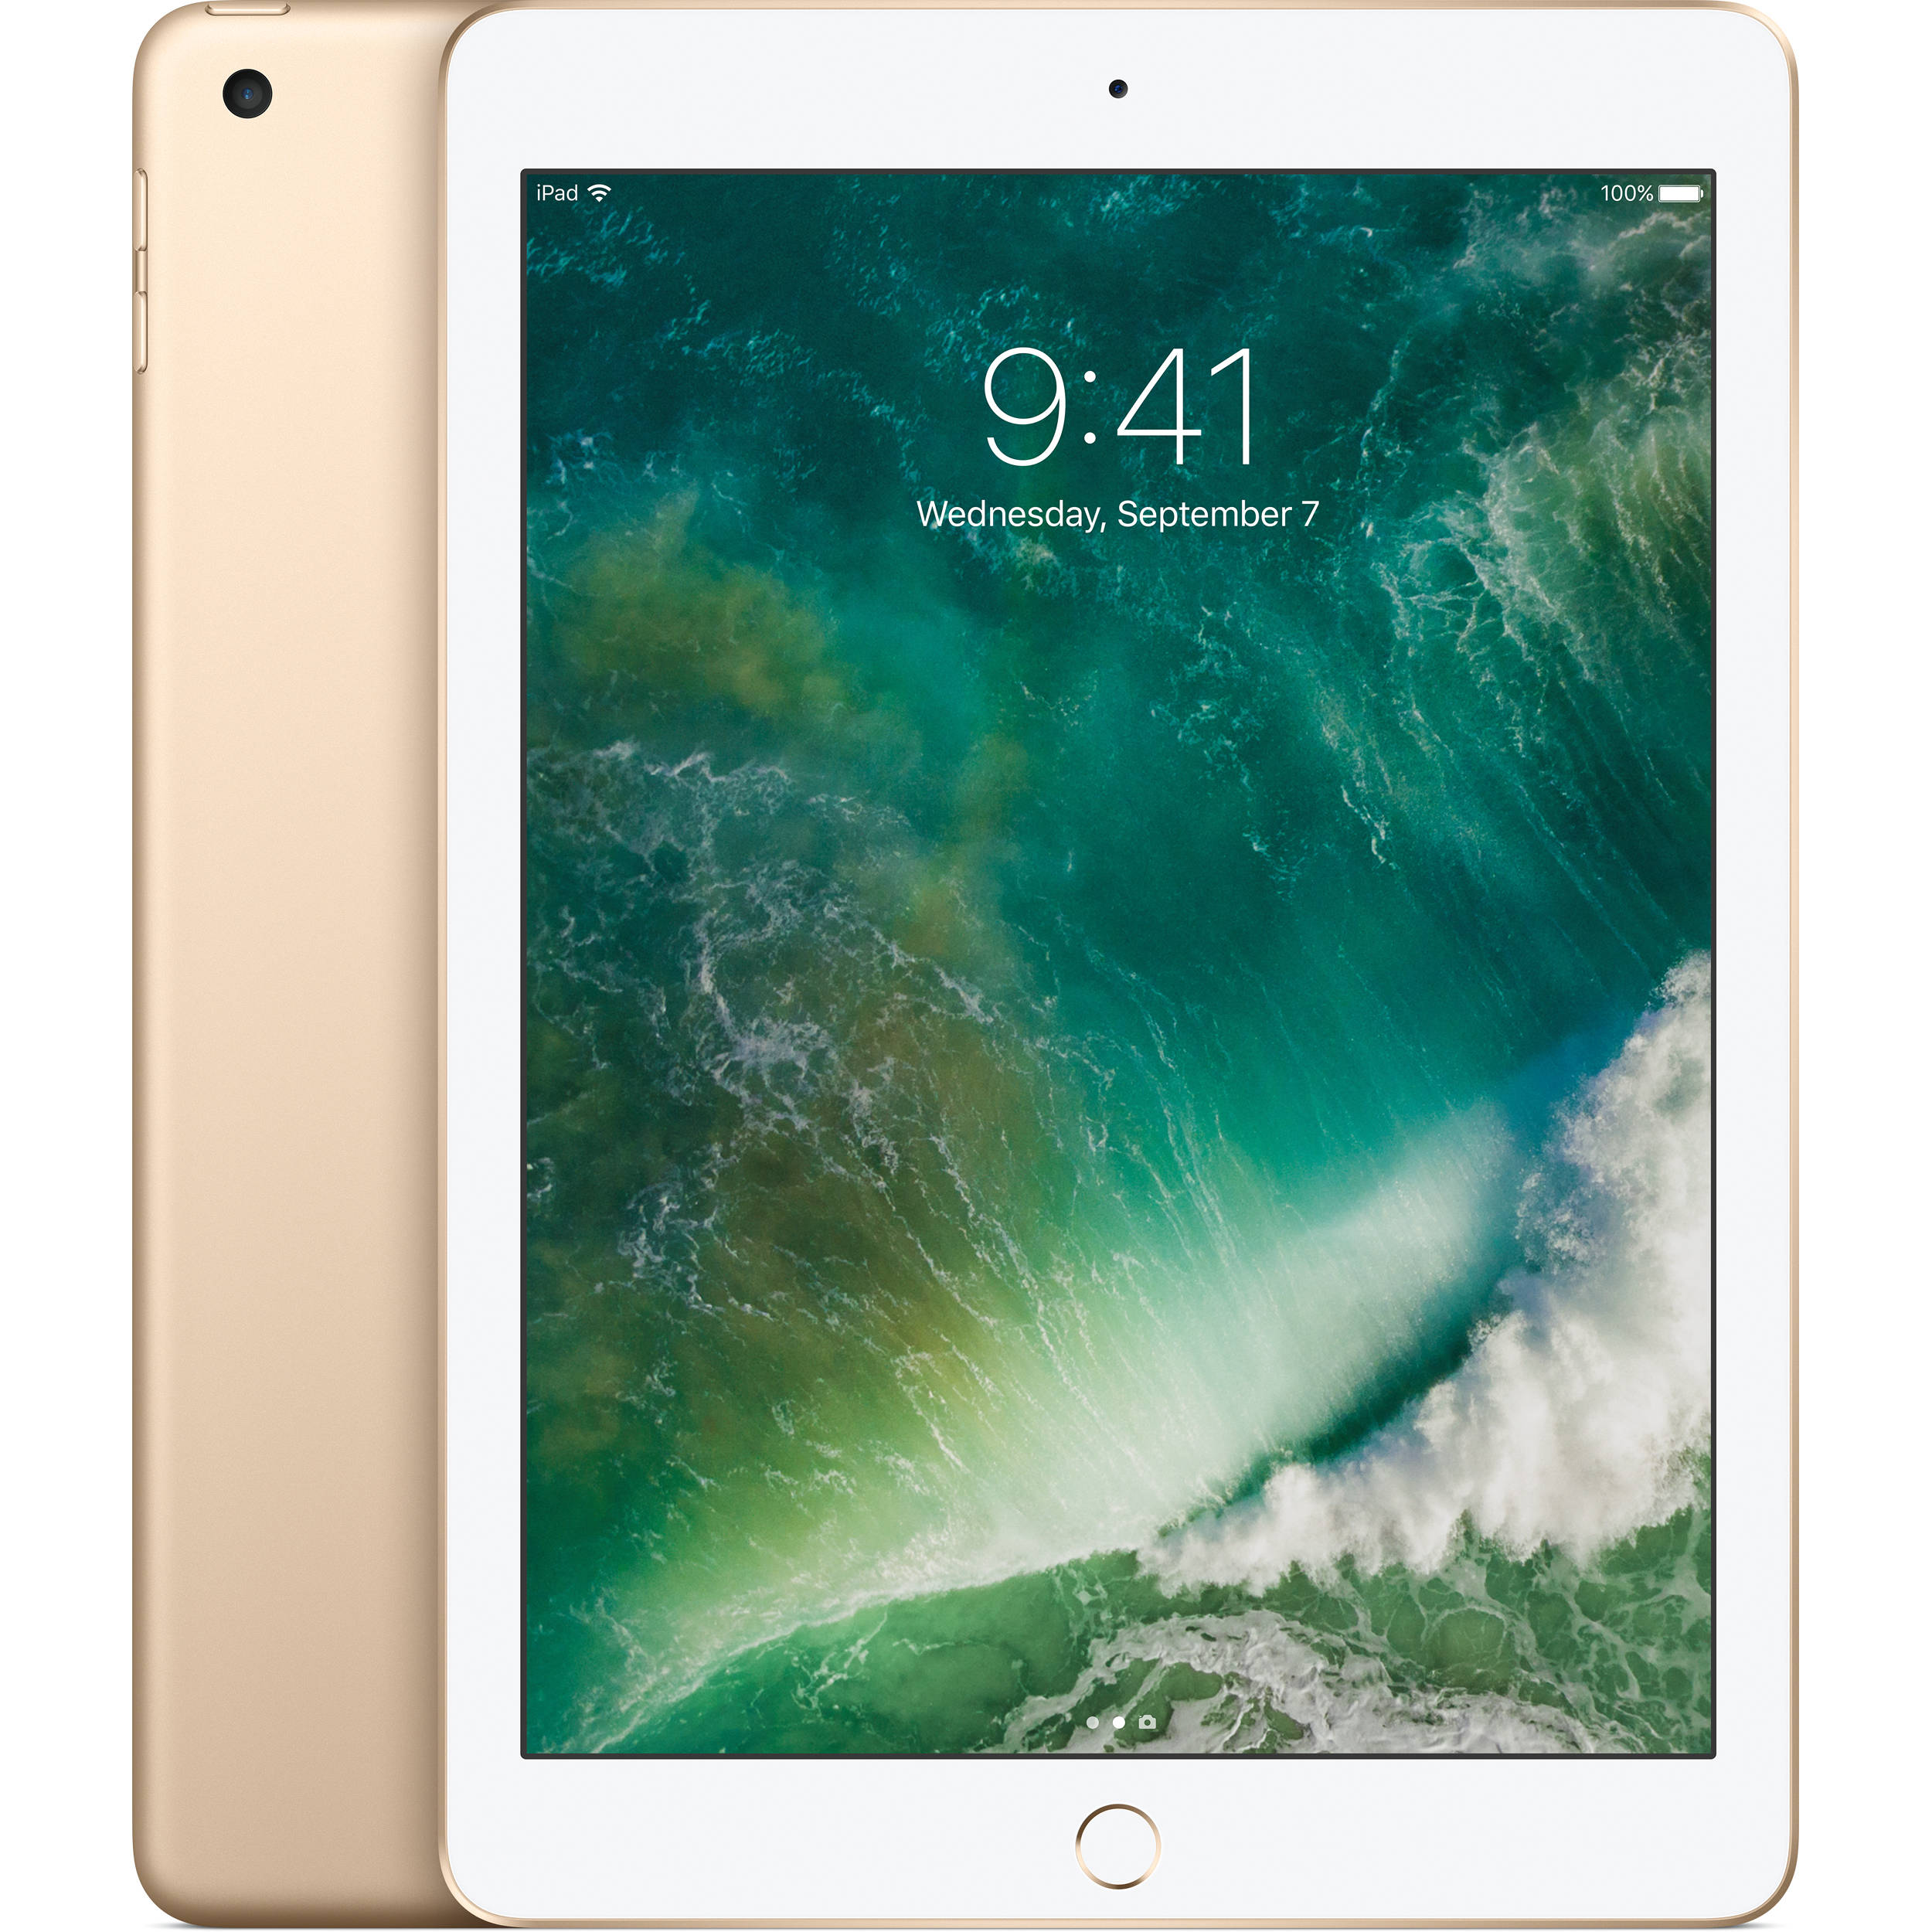 Restored Apple iPad 5th Generation 128GB WiFi, Gold (Refurbished) - image 3 of 5